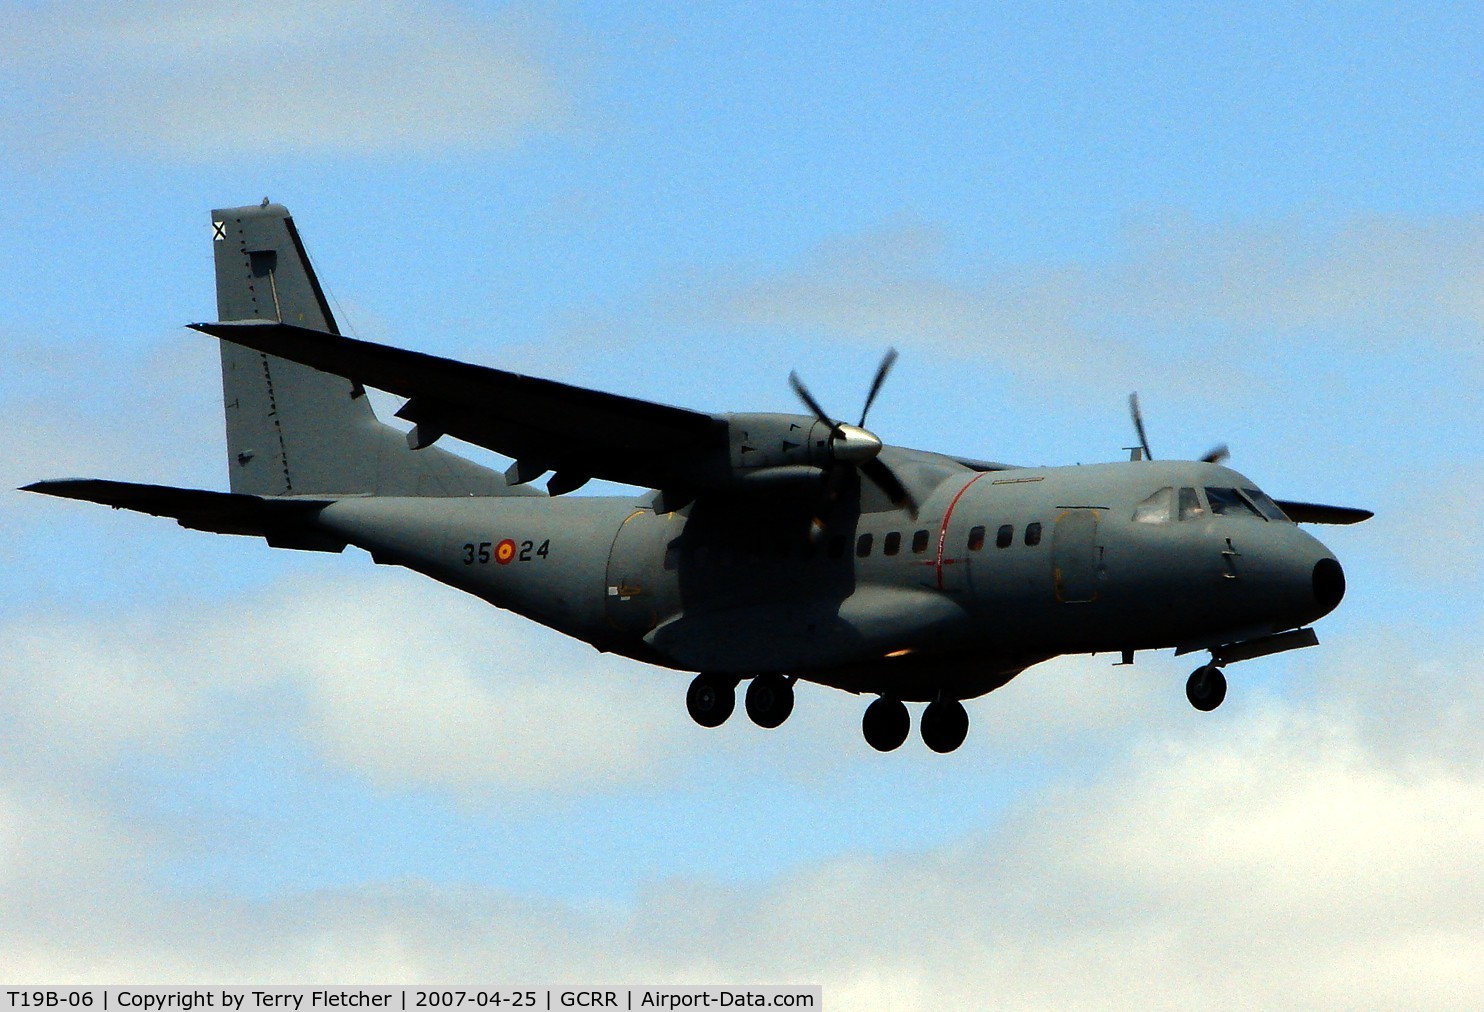 T19B-06, Airtech CN-235-100M C/N C037, Casa 235 on approach to Lanzarote